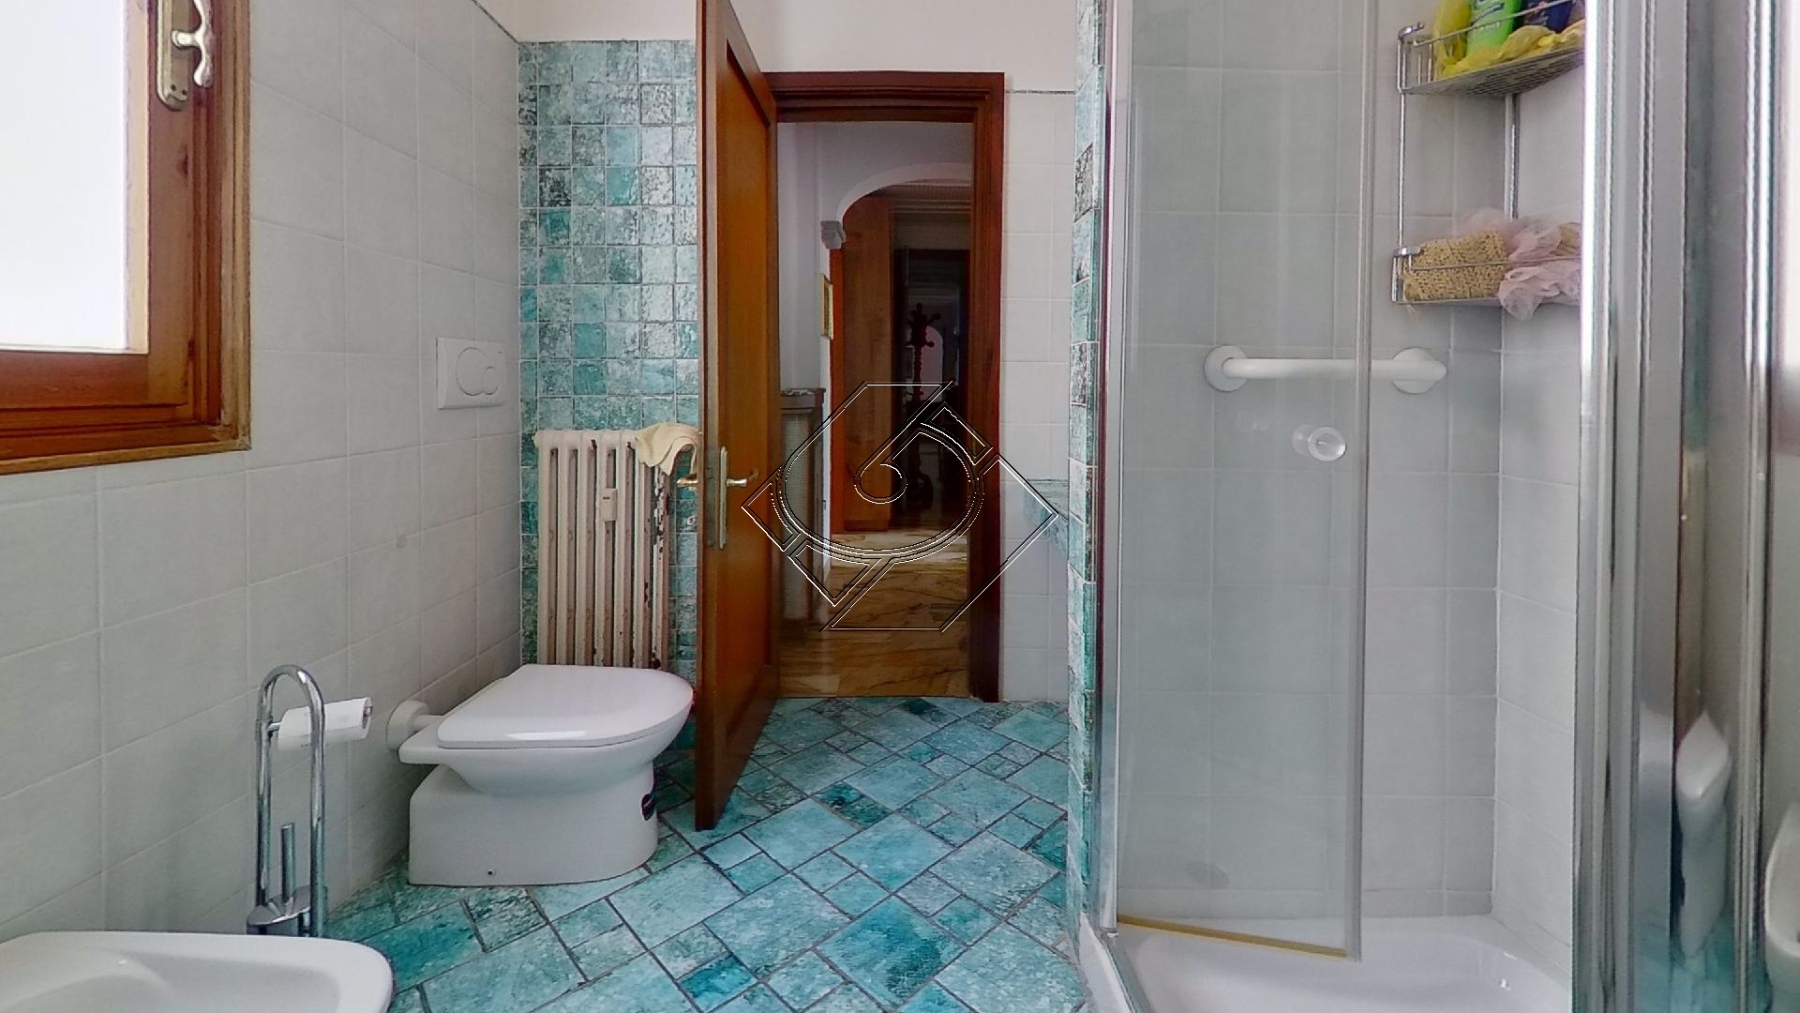 38A-Via-Ferdinando-Paoletti-Bathroom